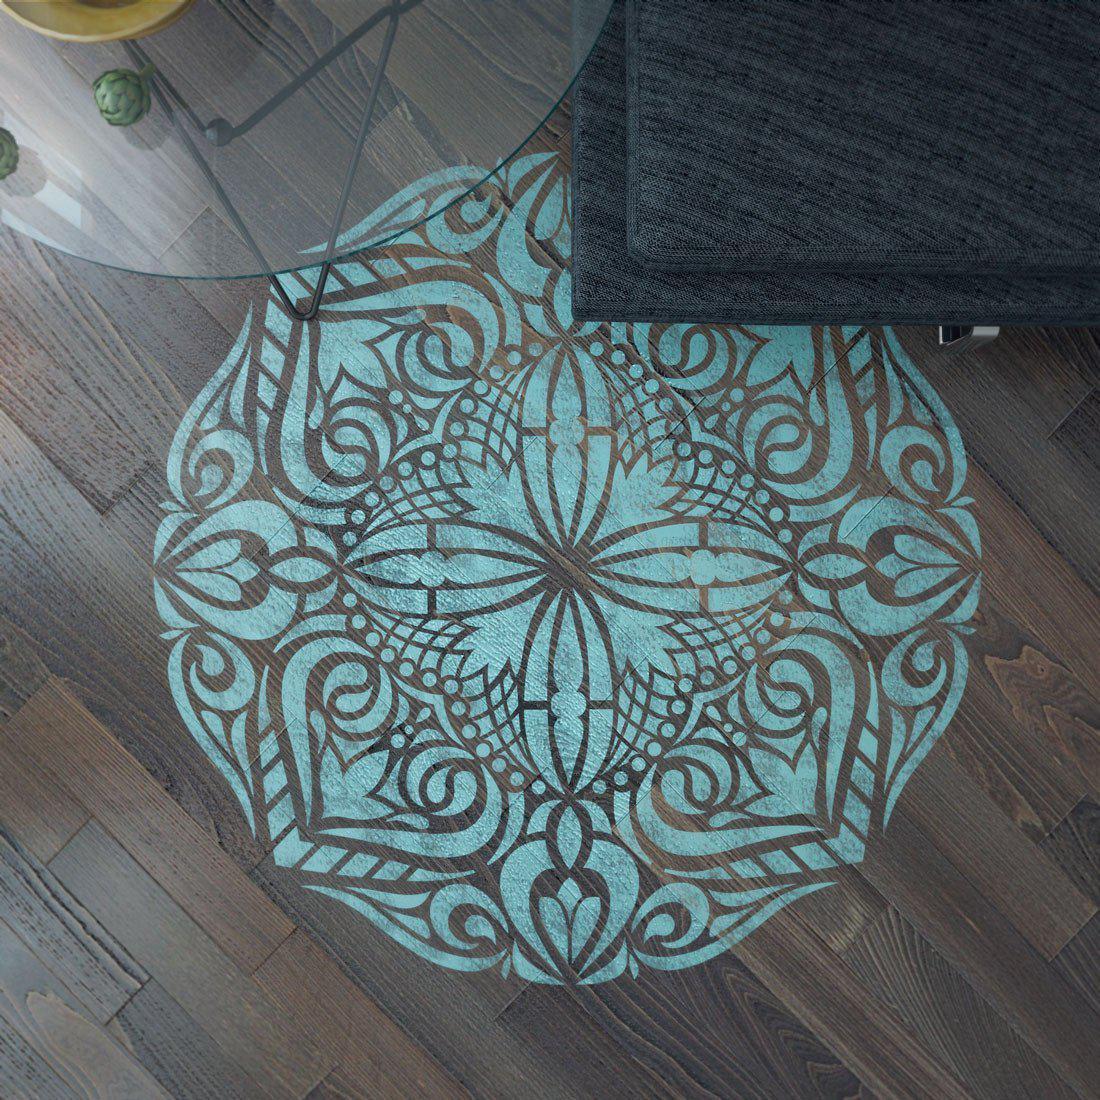 Mandala Stencil - Flower of Life Stencil - Mandala-Style Stencil - Flower of Life Design- Wall Stencil - Geometric Design 78